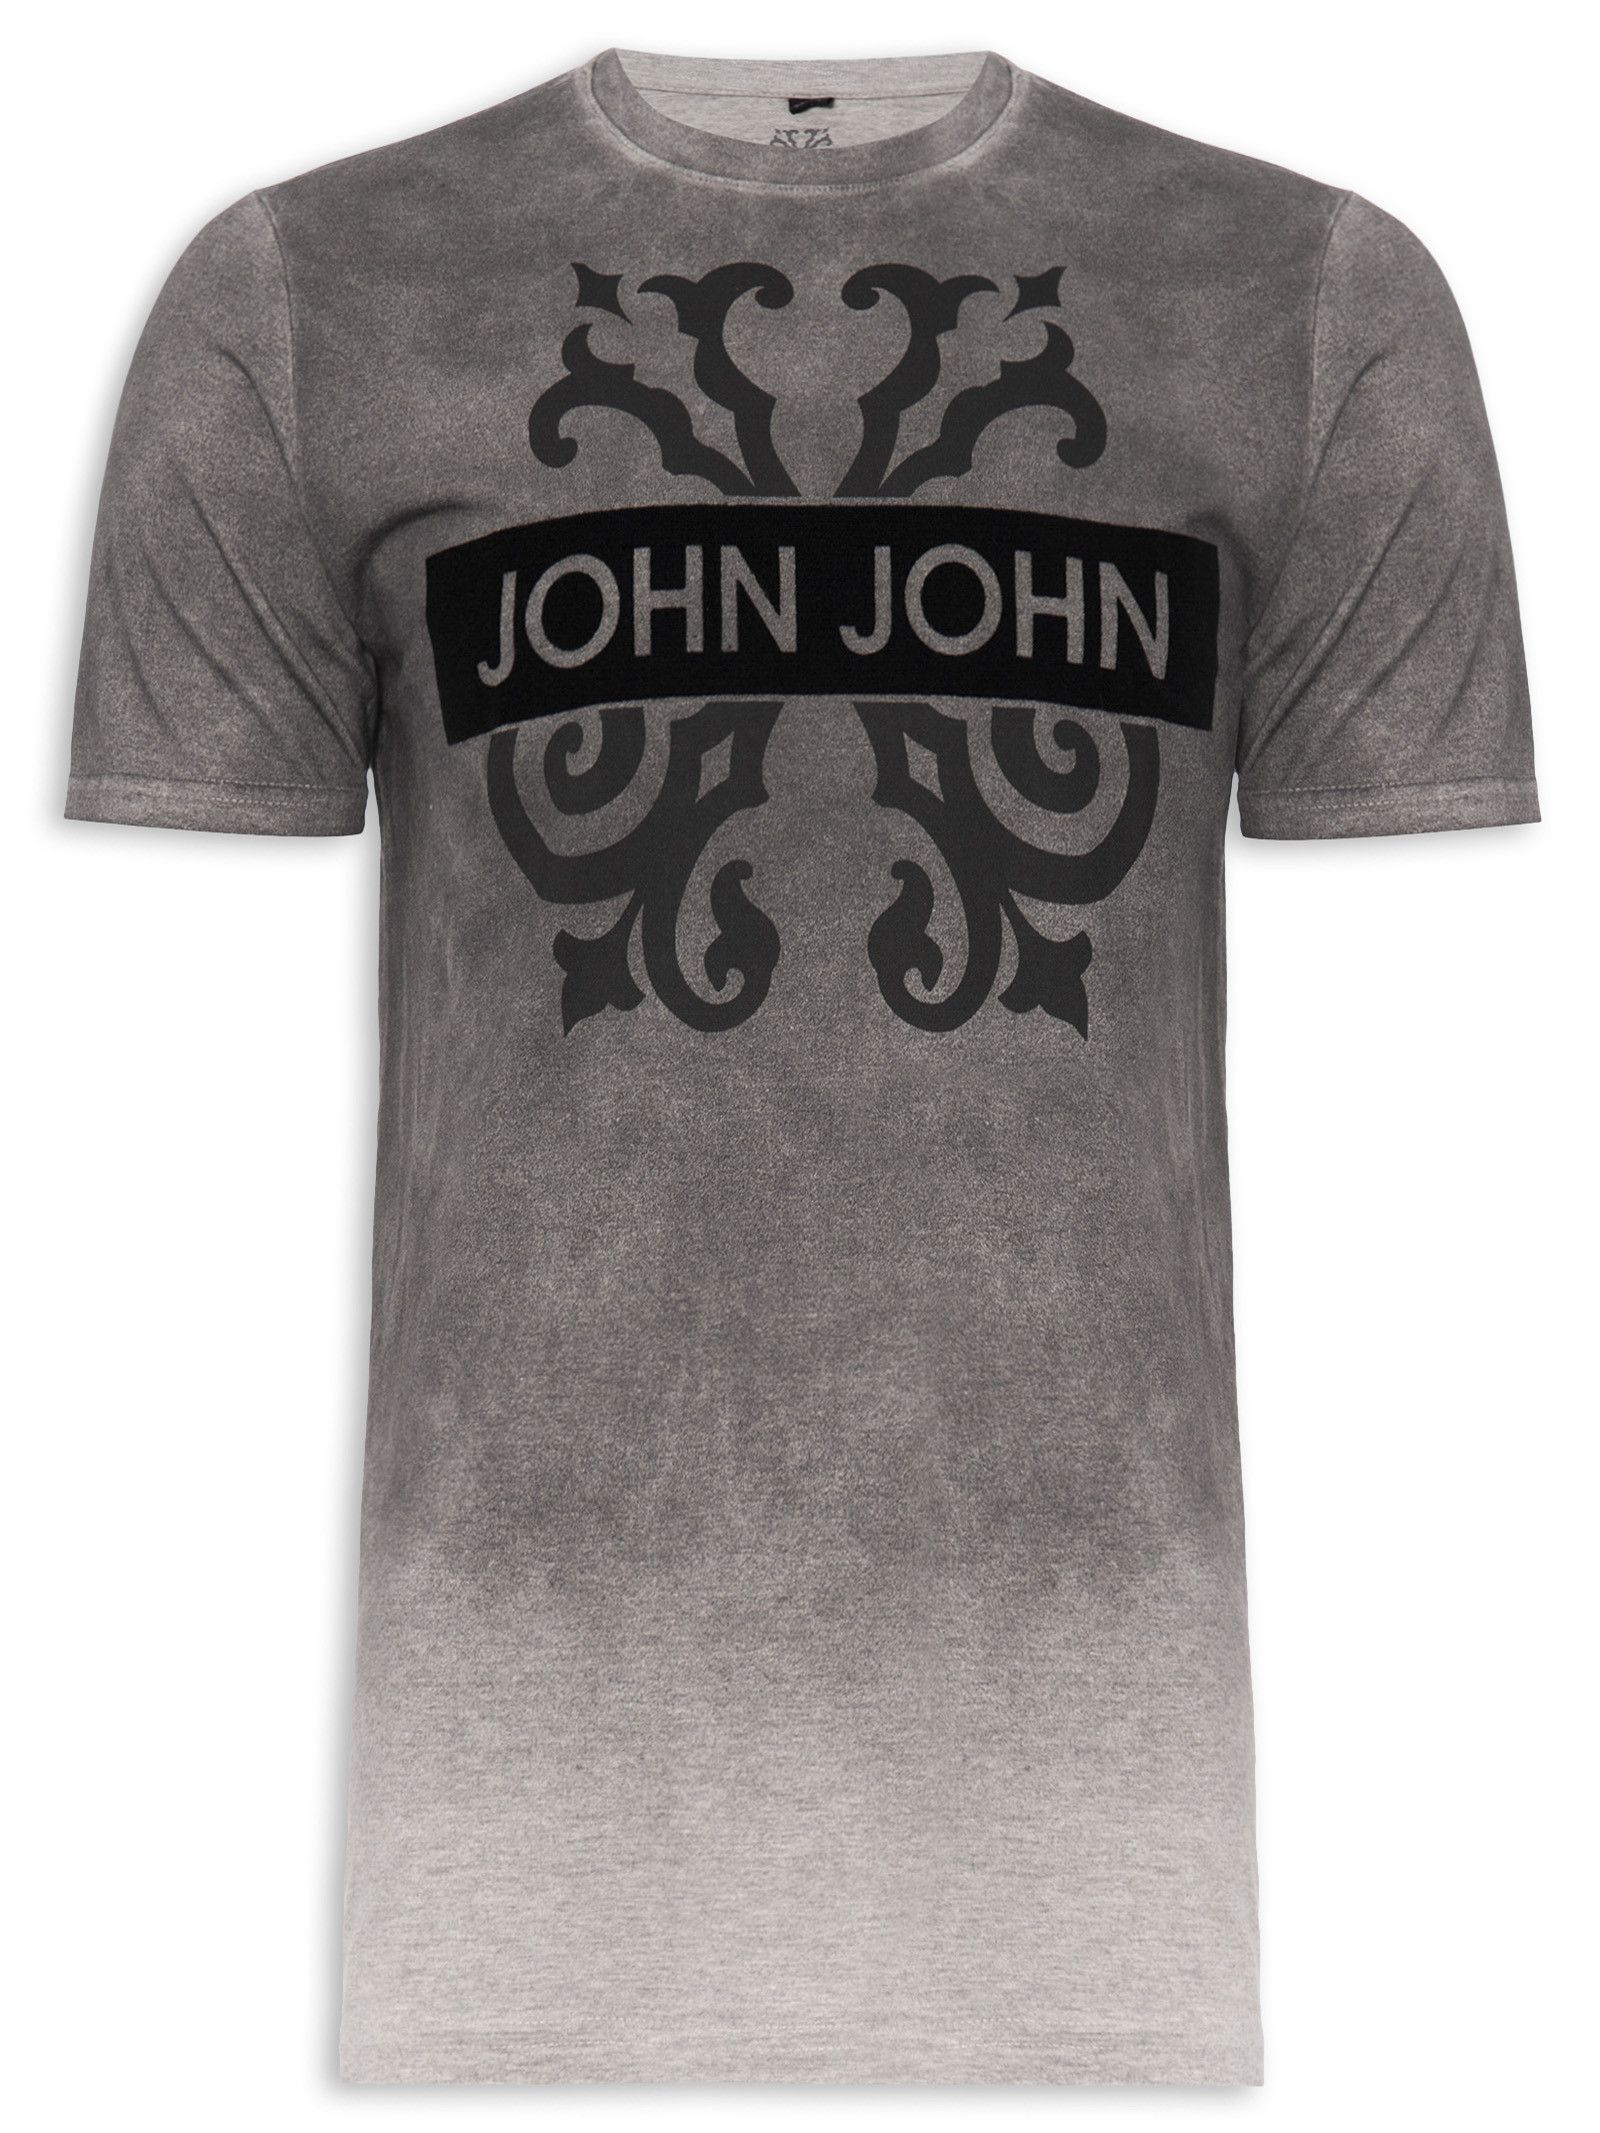 Camiseta John John Summer Season Cinza - Dom Store Multimarcas Vestuário  Calçados Acessórios, camiseta john john caveira - marazulseguros.com.br